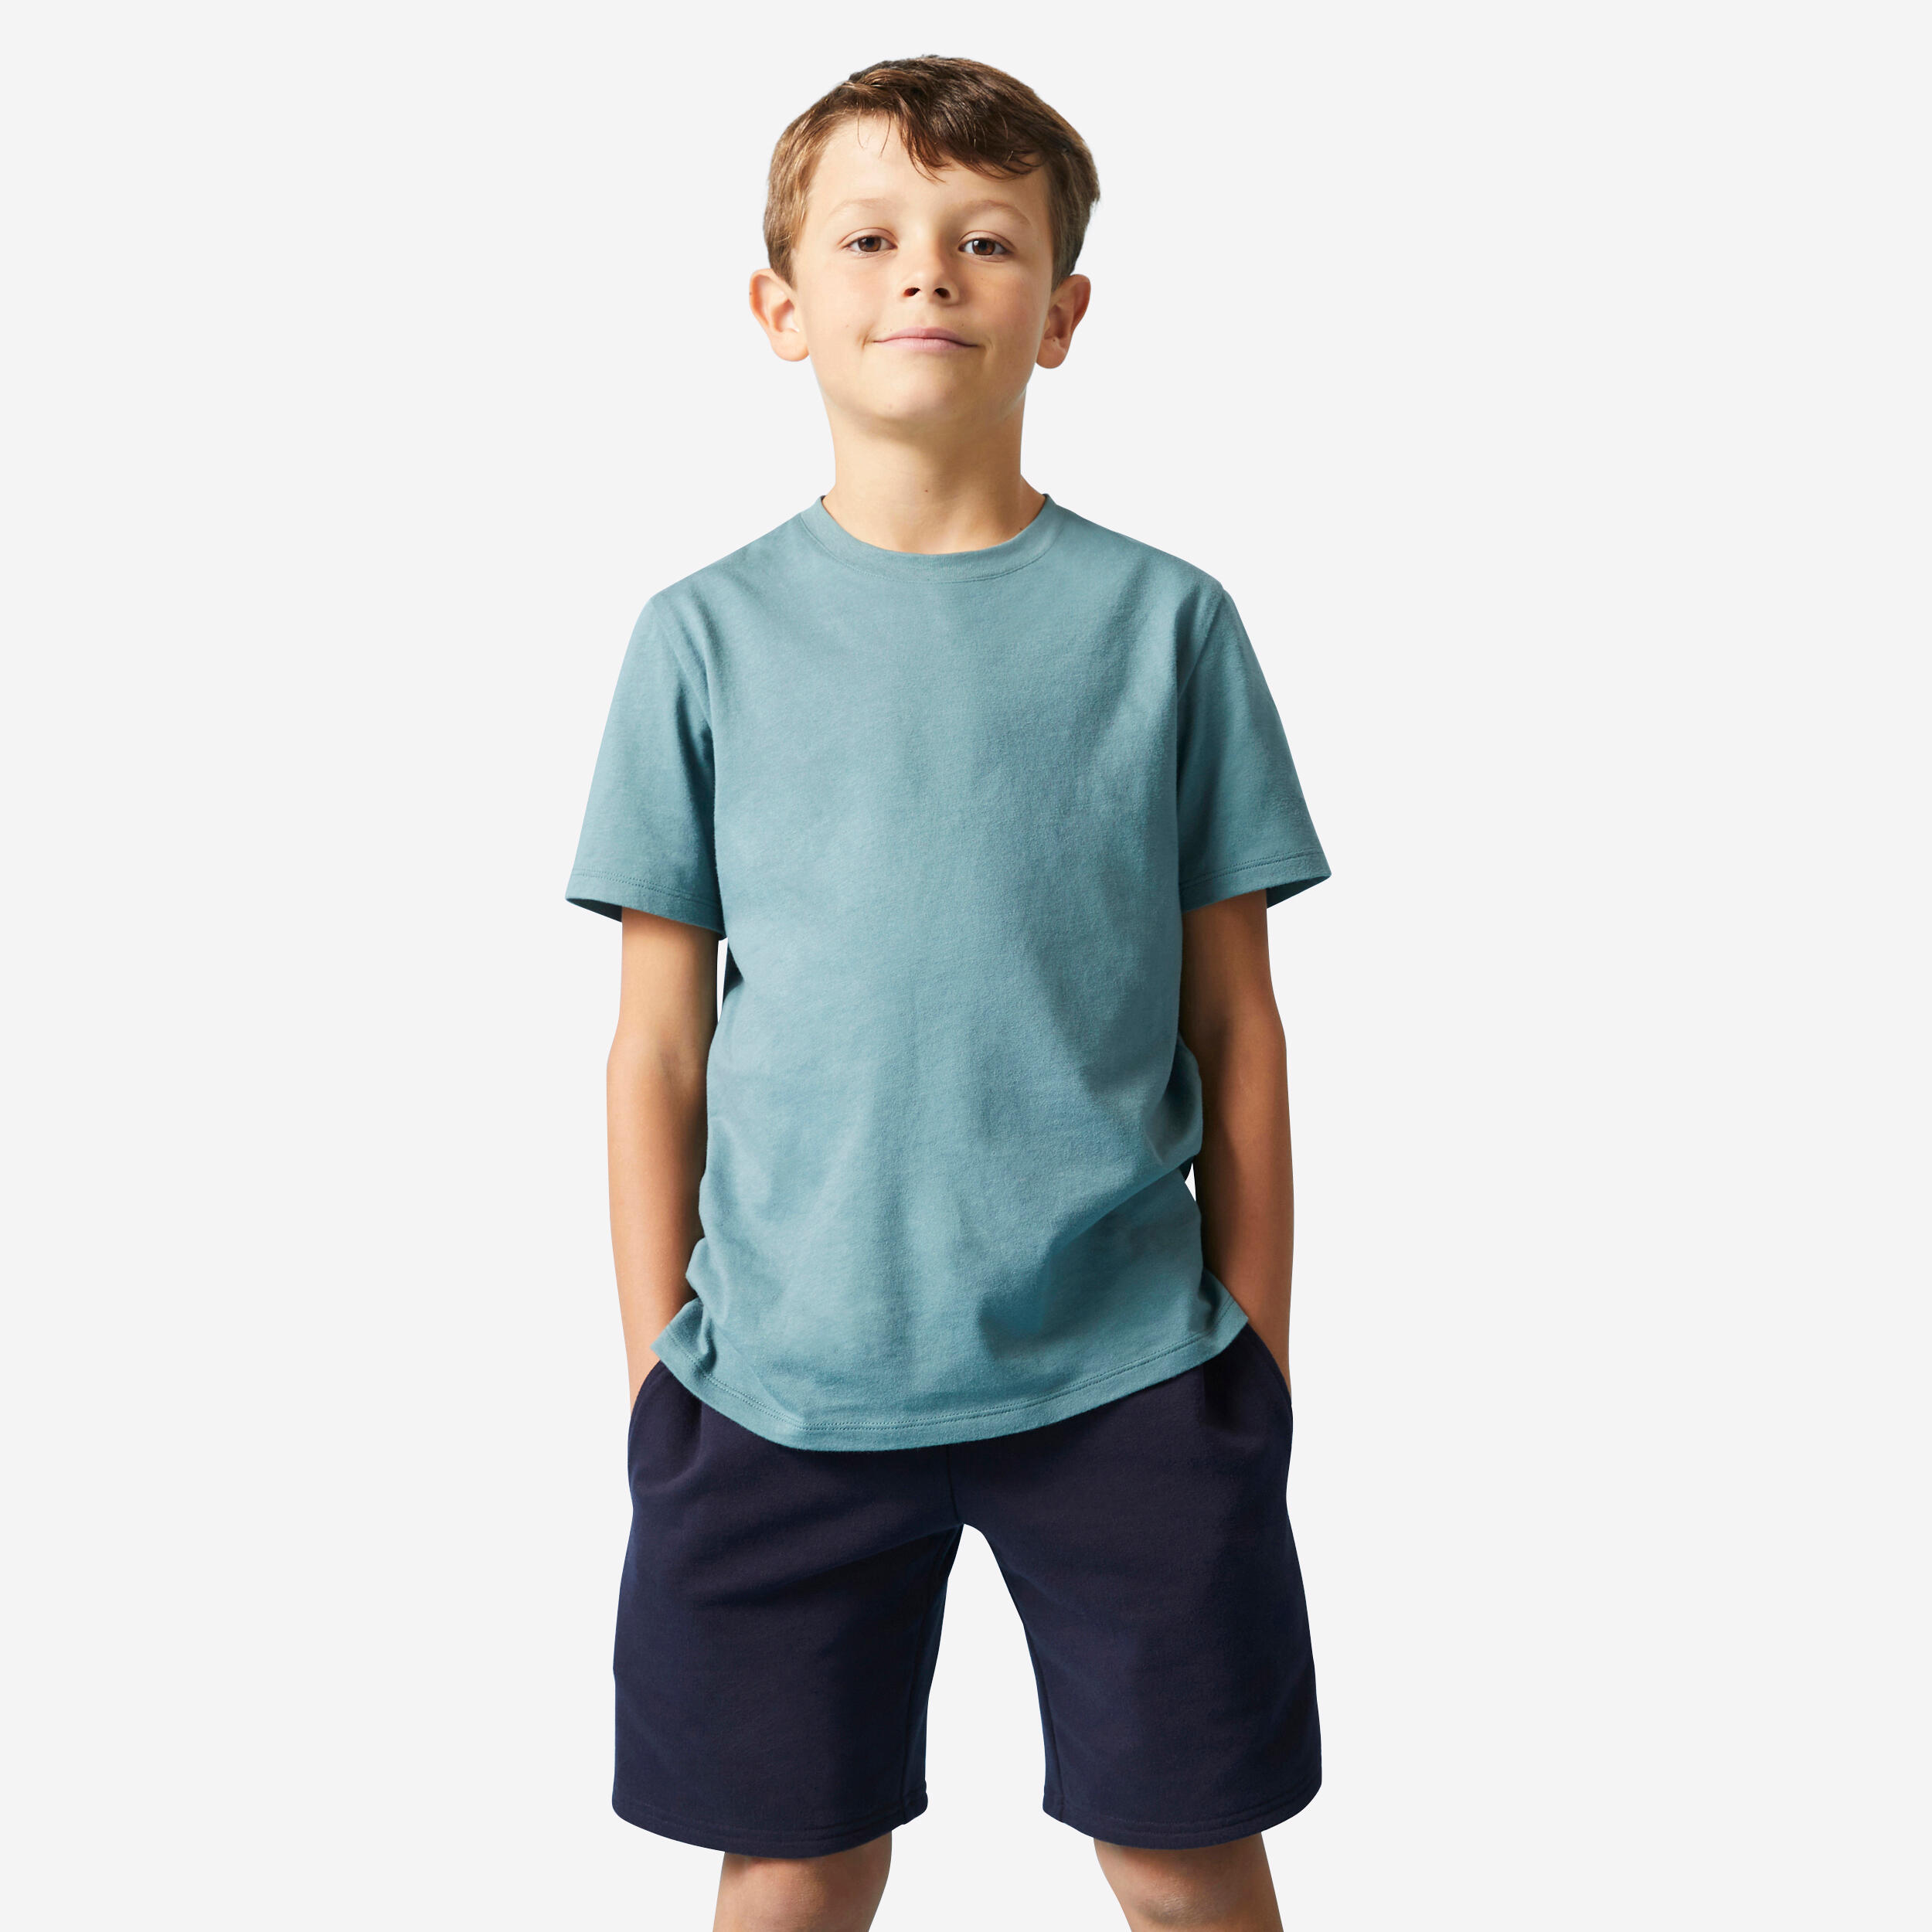 Kids' Unisex Cotton T-Shirt - Khaki 1/8